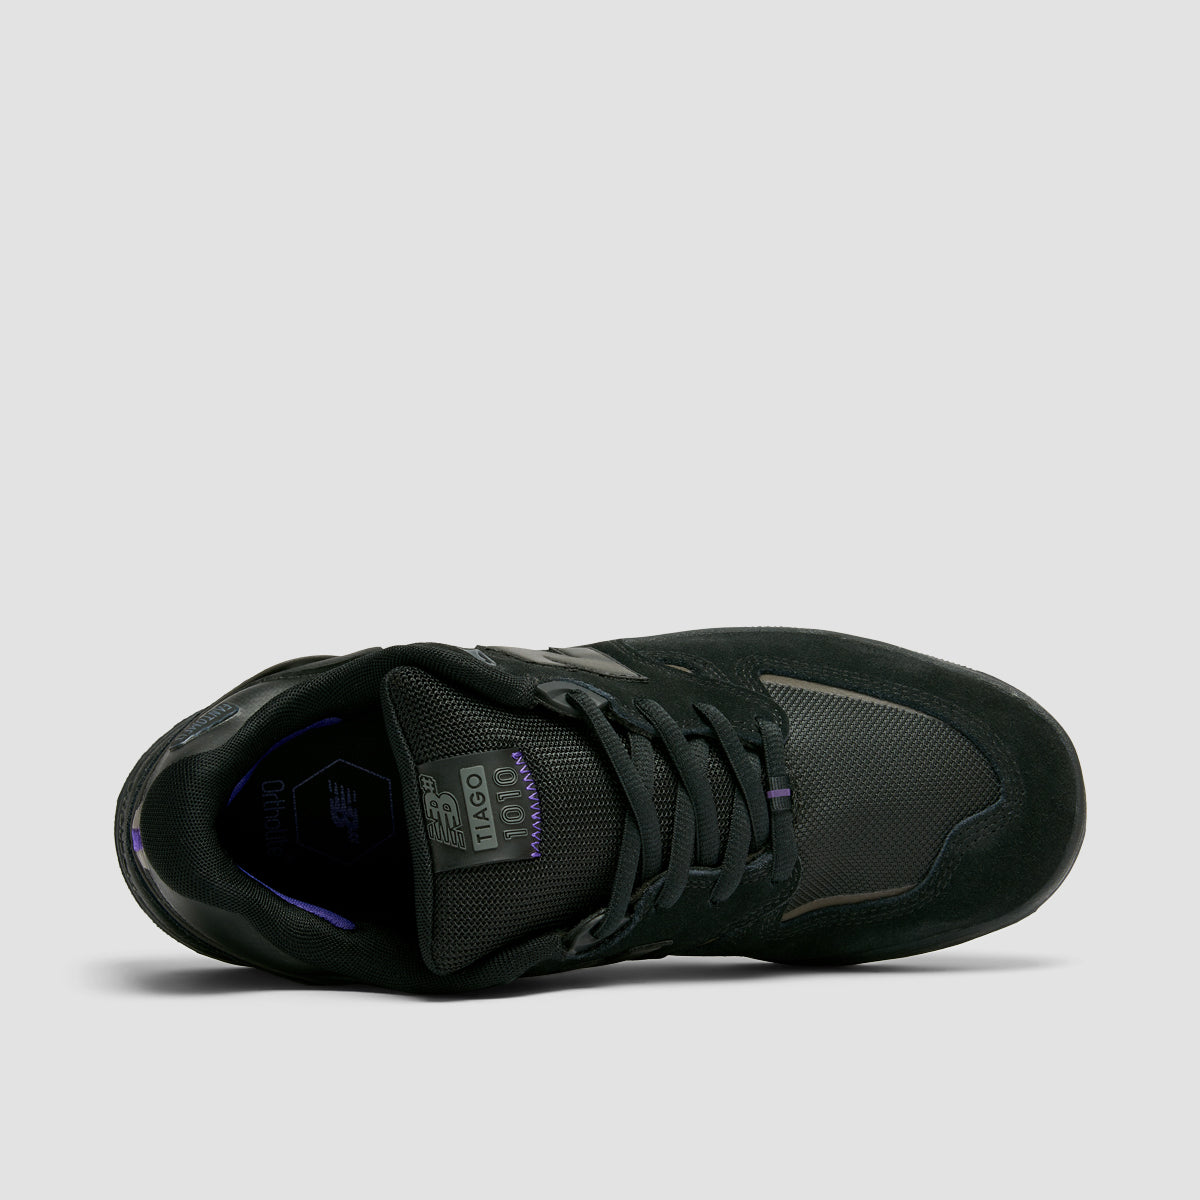 New Balance Numeric 1010 Tiago Lemos Shoes - Black/Black